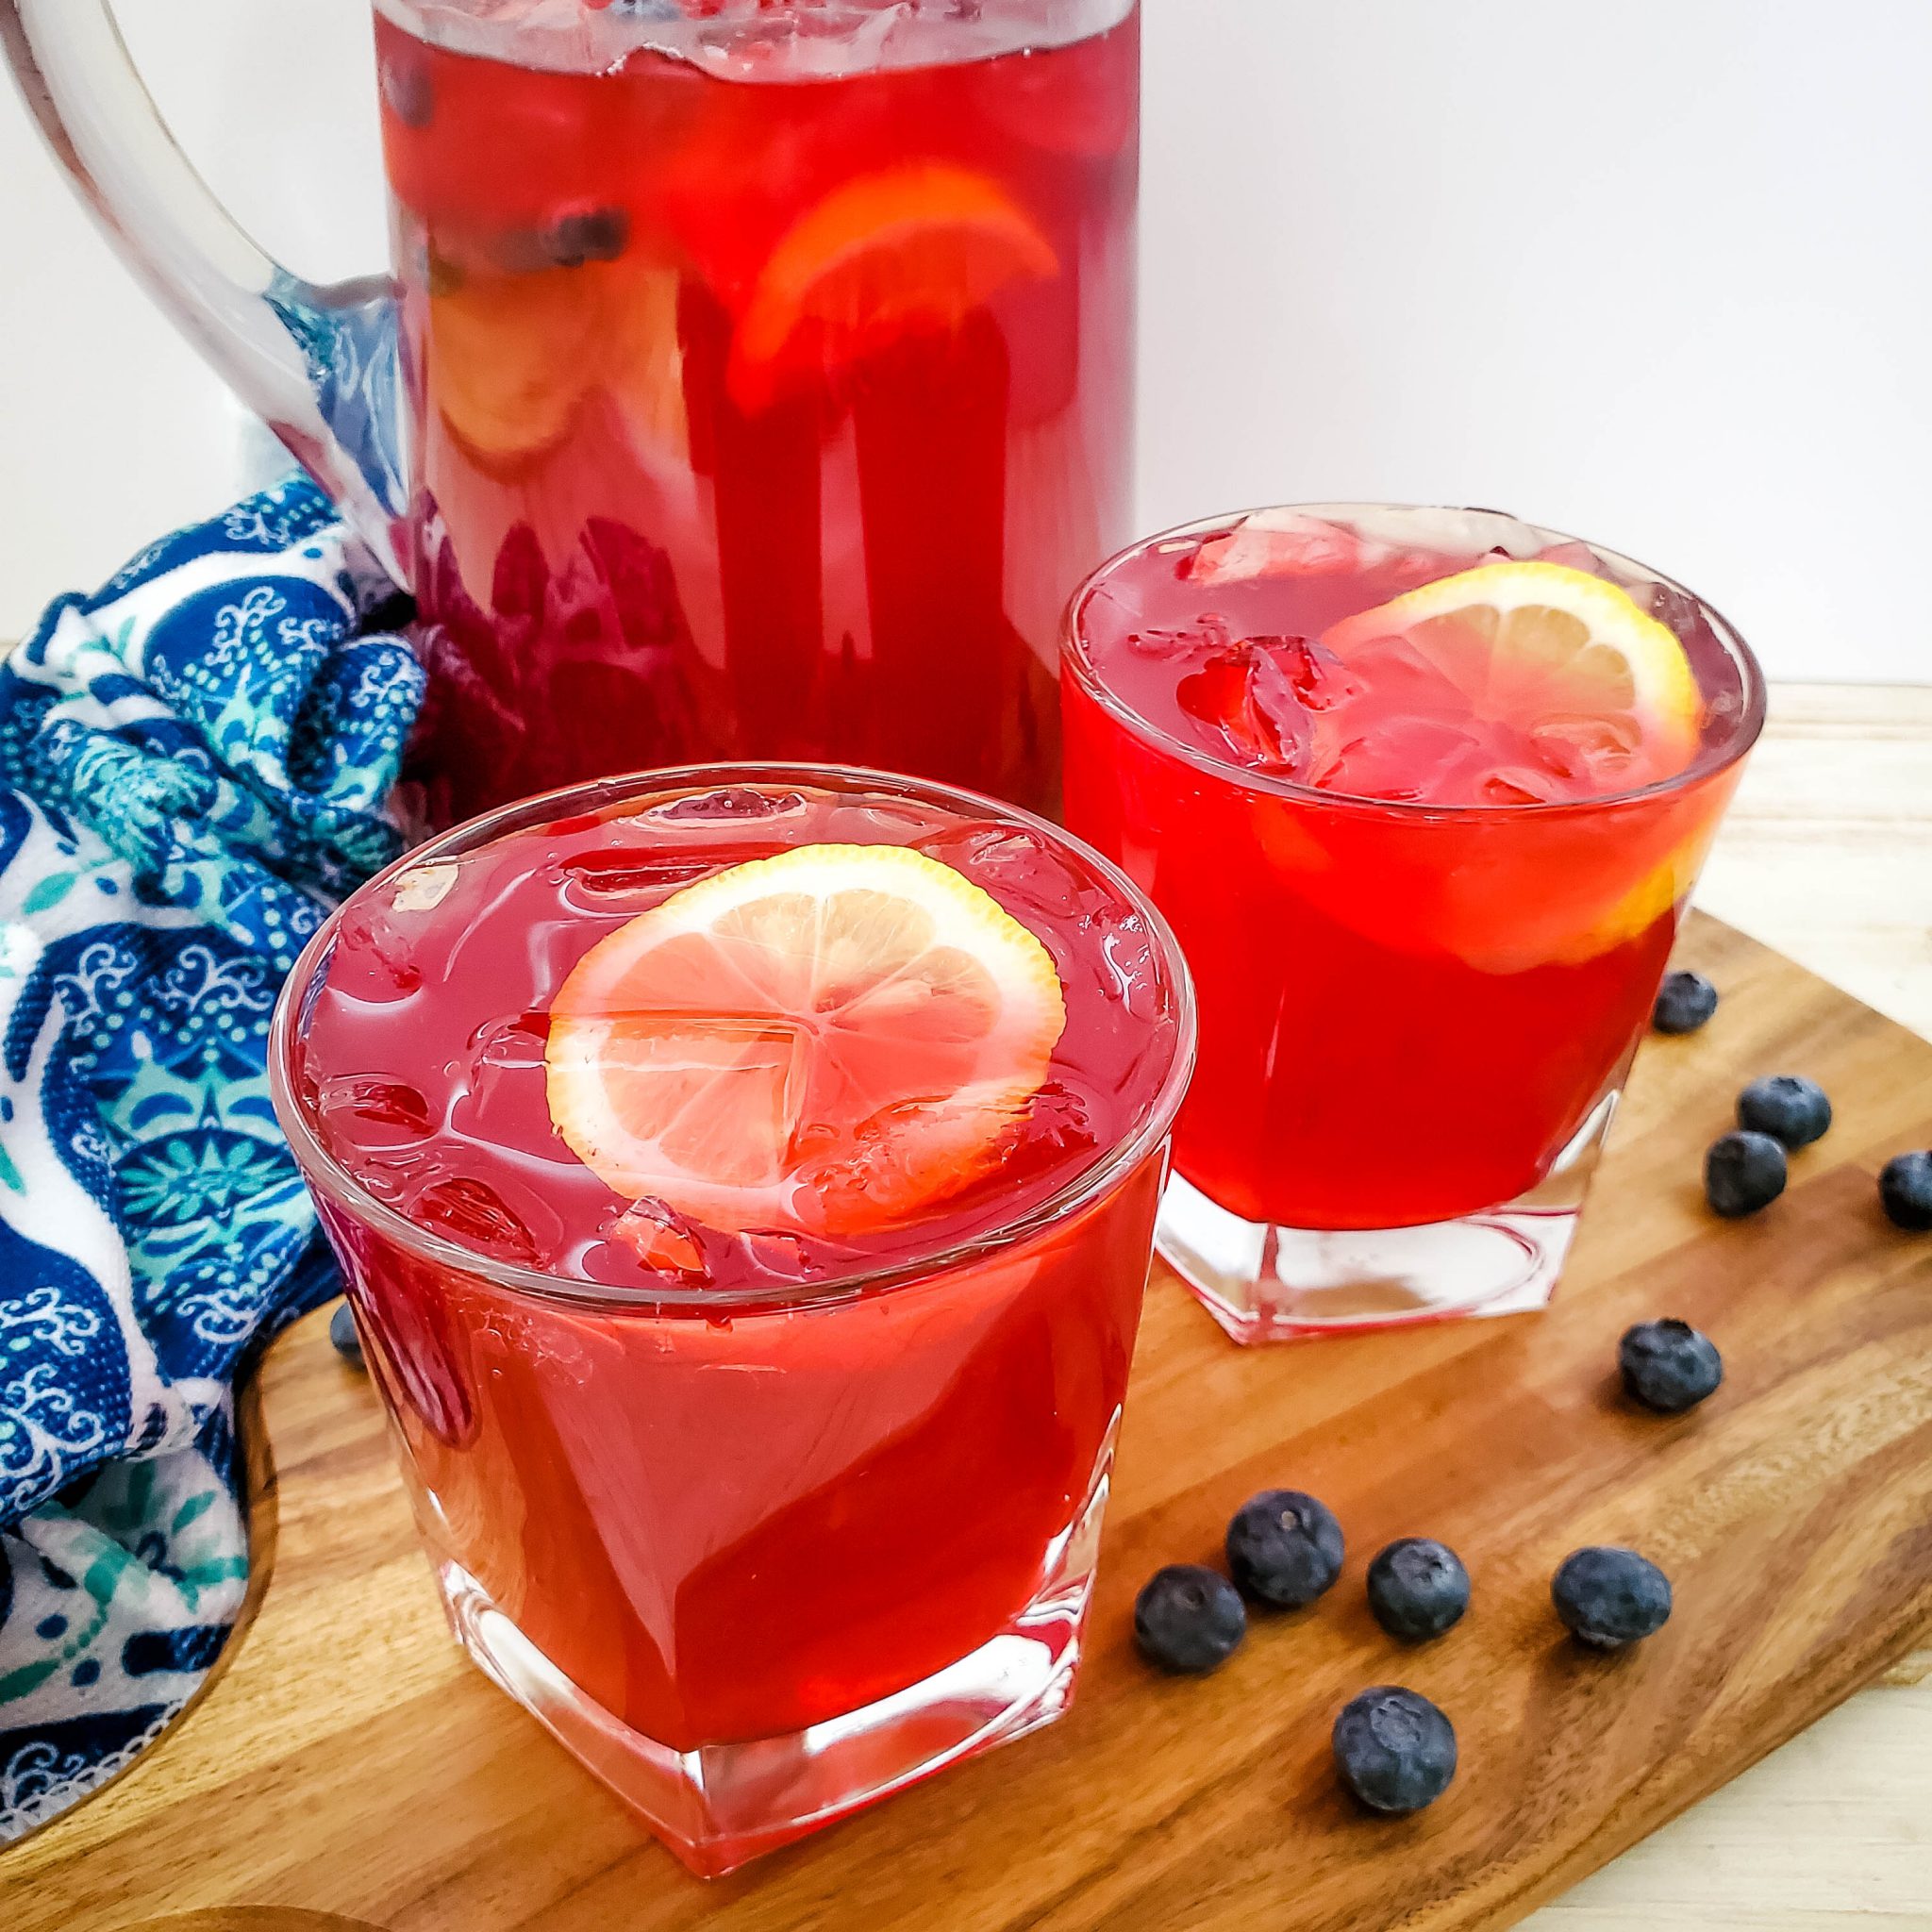 Homemade blueberry lemonade served in glasses garnished with lemons and blueberries